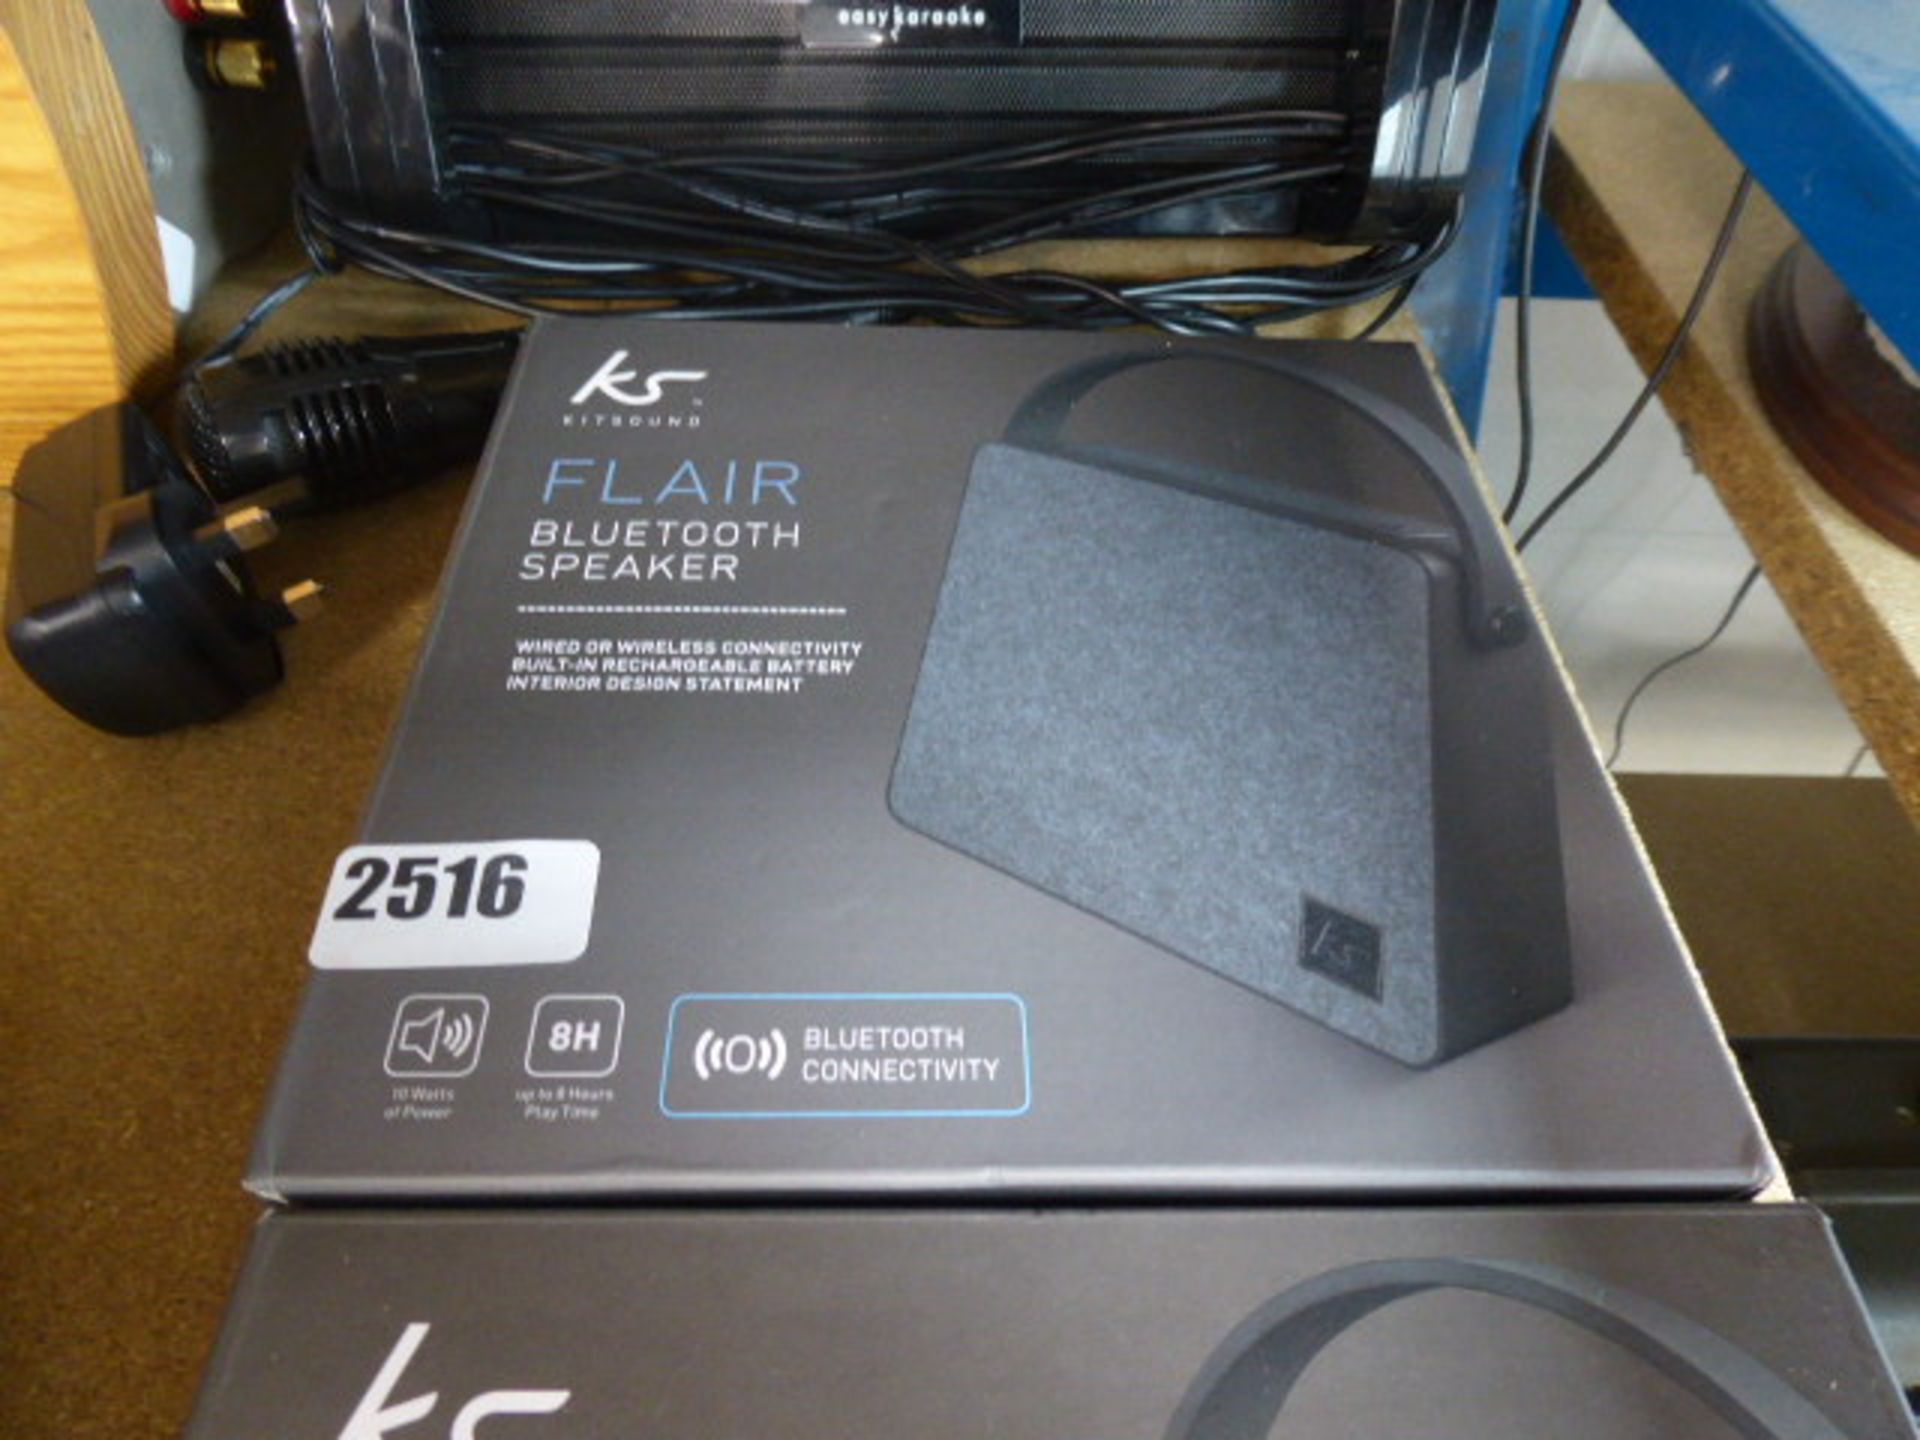 Kick Sound Flare bluetooth speaker in box